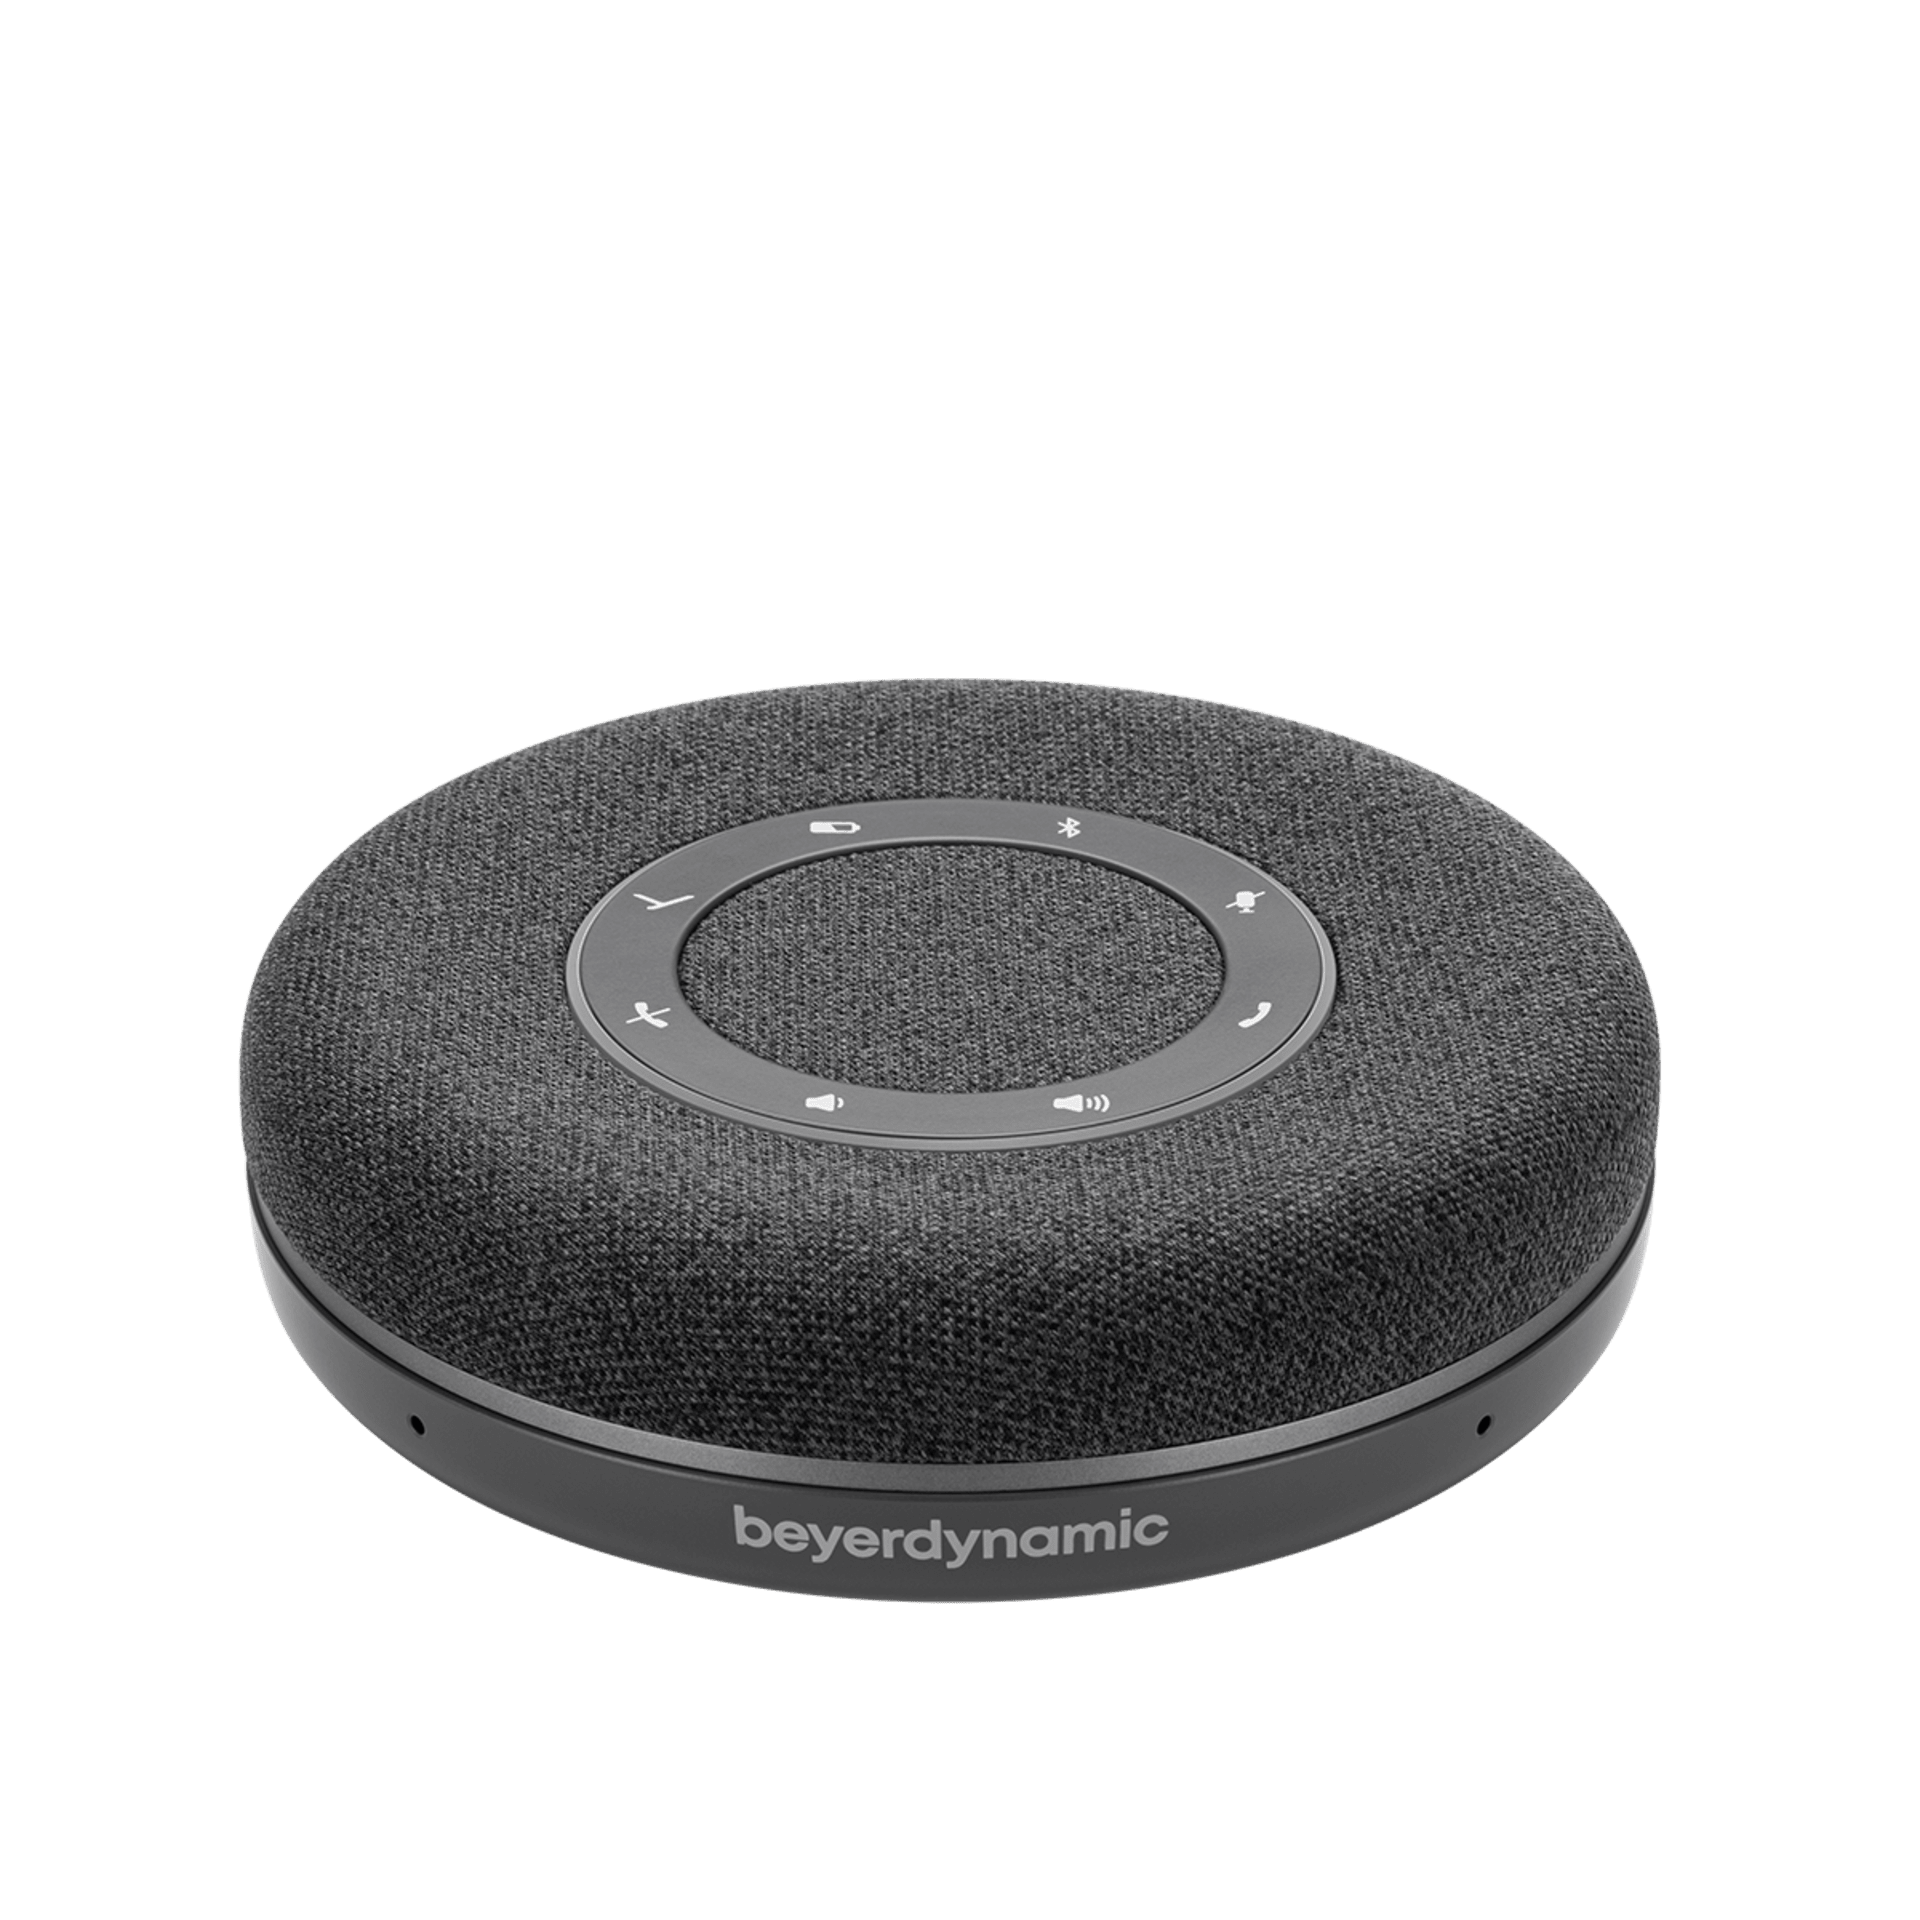 Beyerdynamic Space Portable Bluetooth Speakerphone for Calls and ...